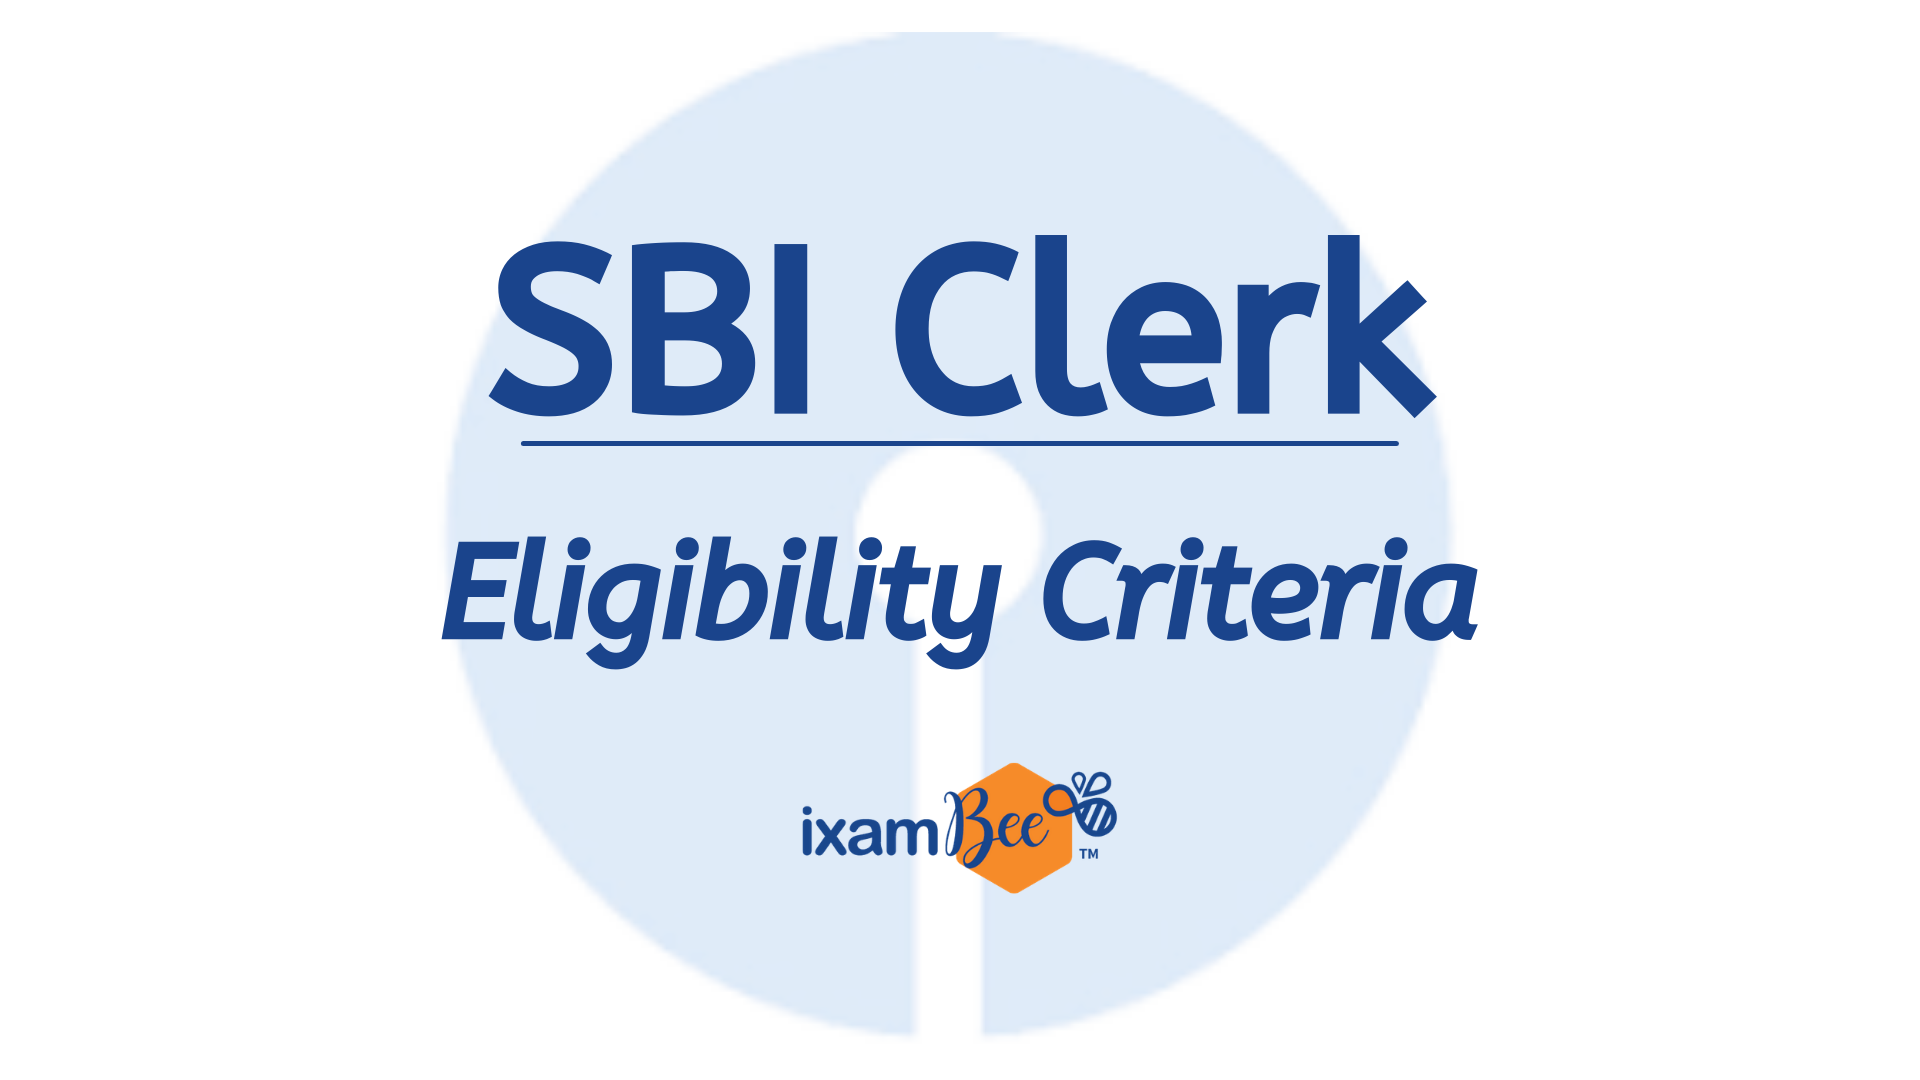 SBI Clerk Eligibility Criteria 2021